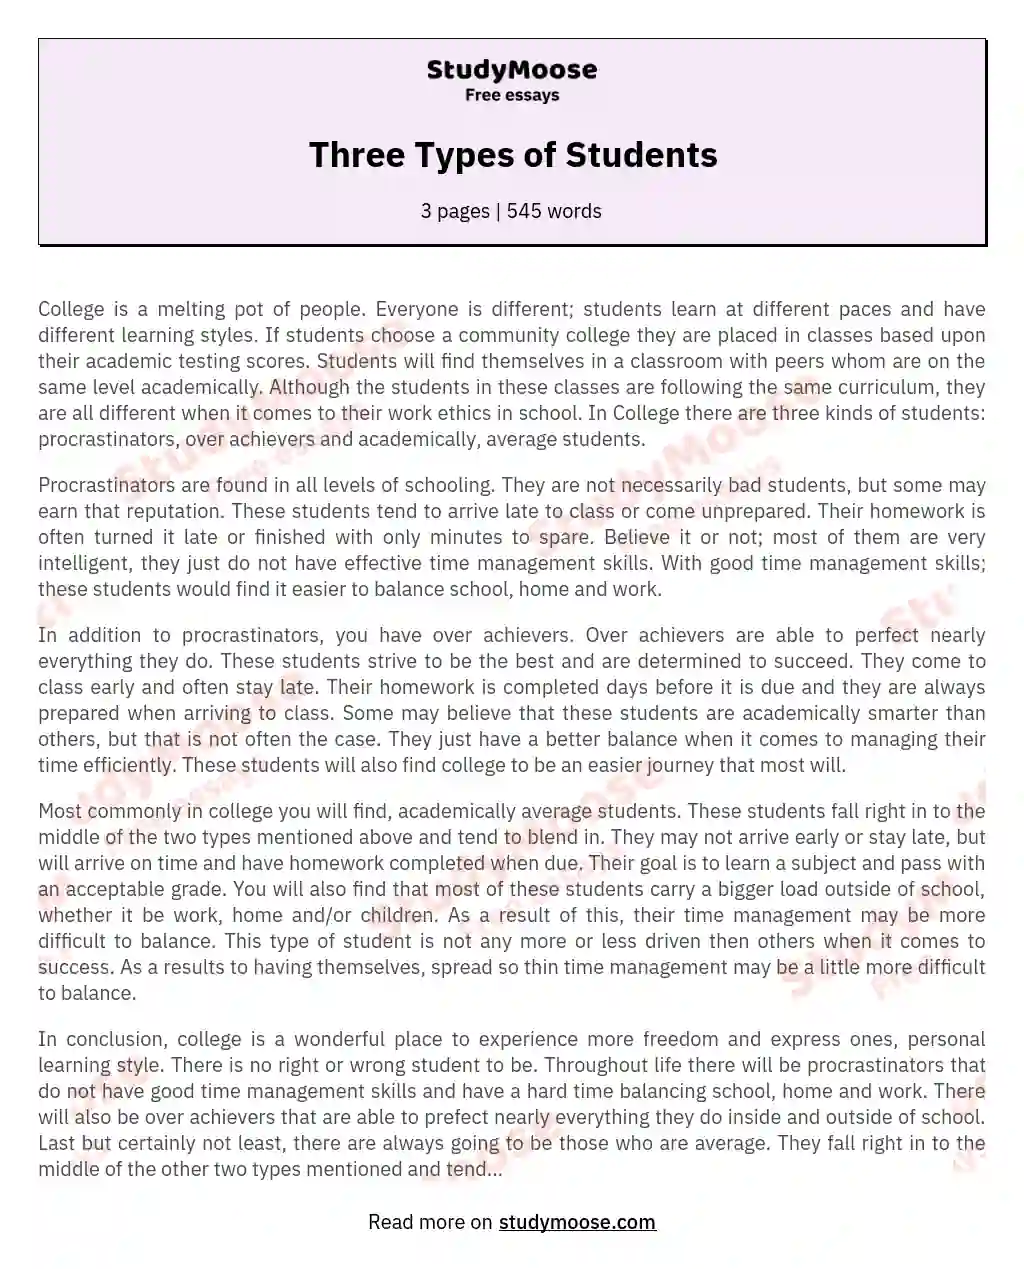 Three Types of Students essay